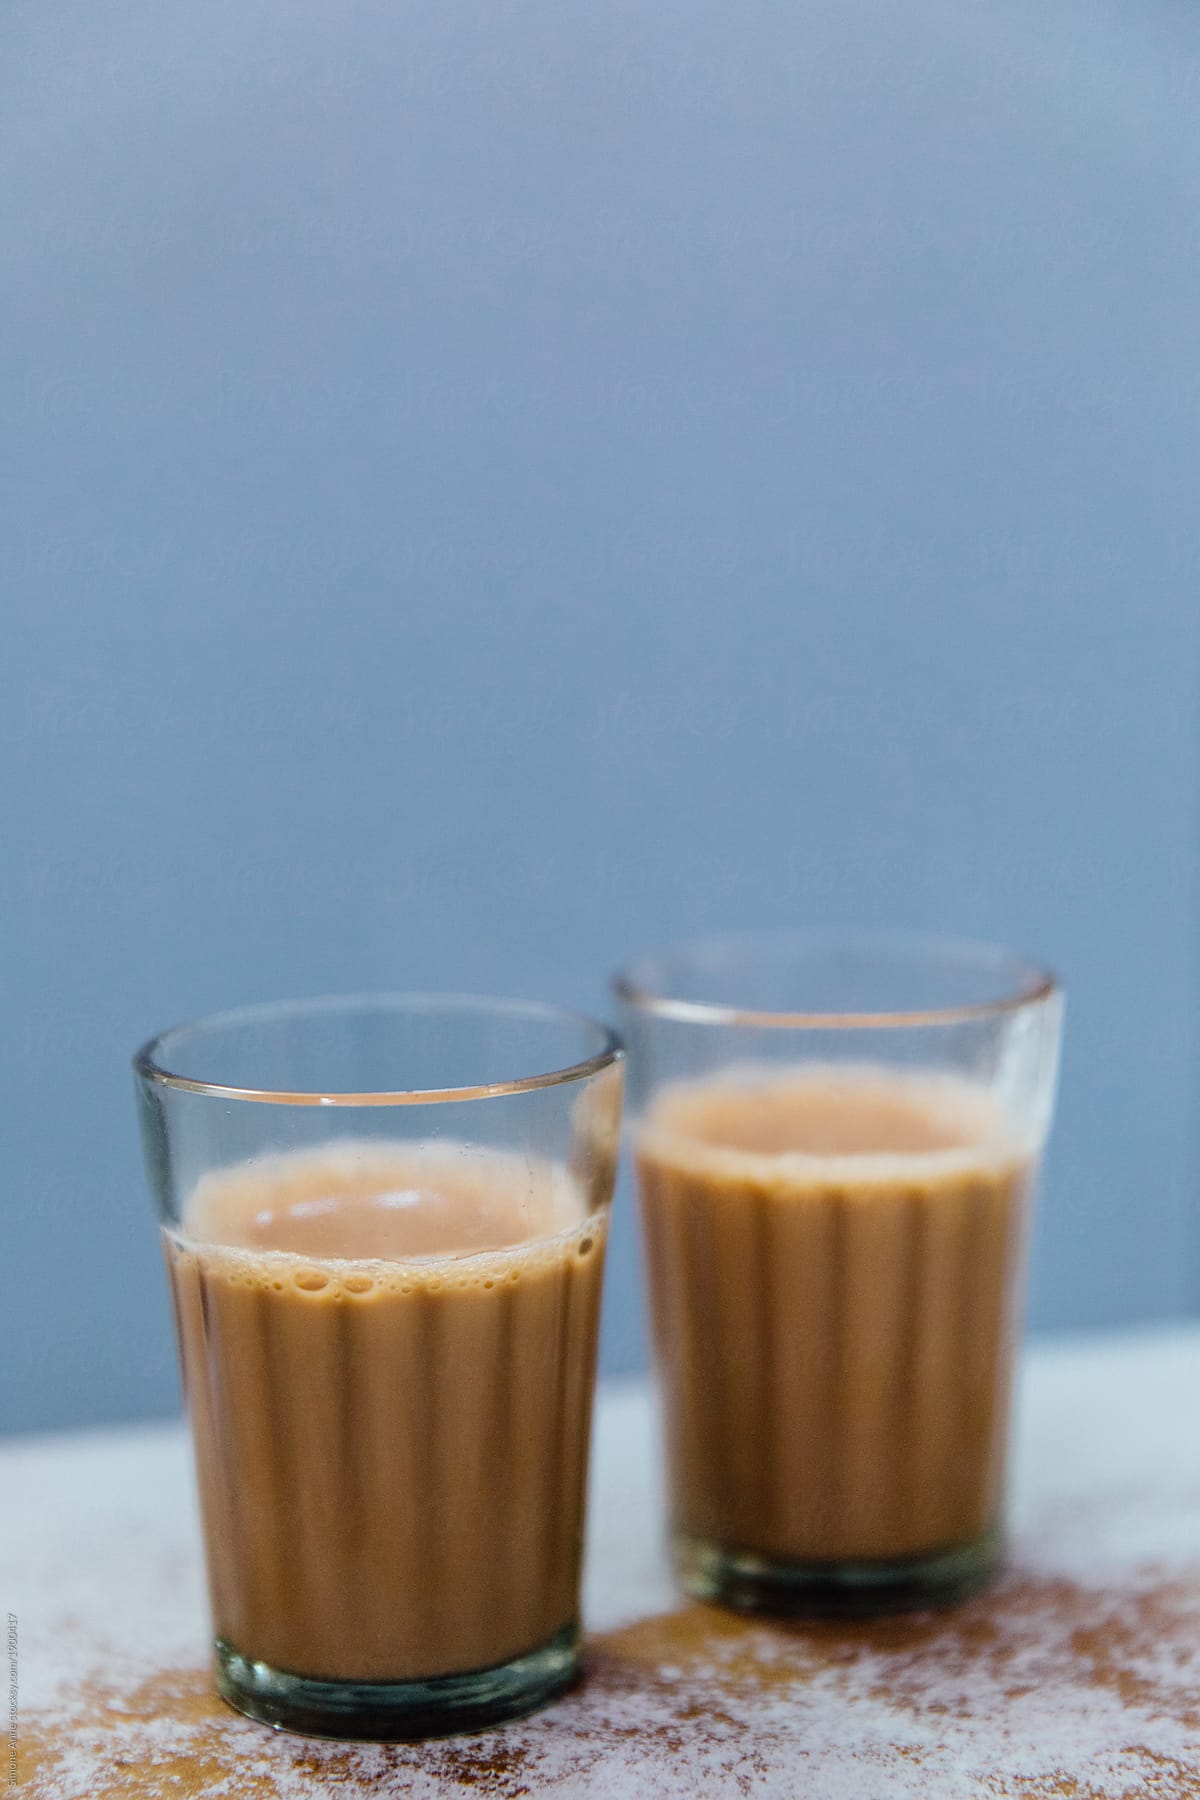 Two cups of Indian masala chai tea .stocksy.com